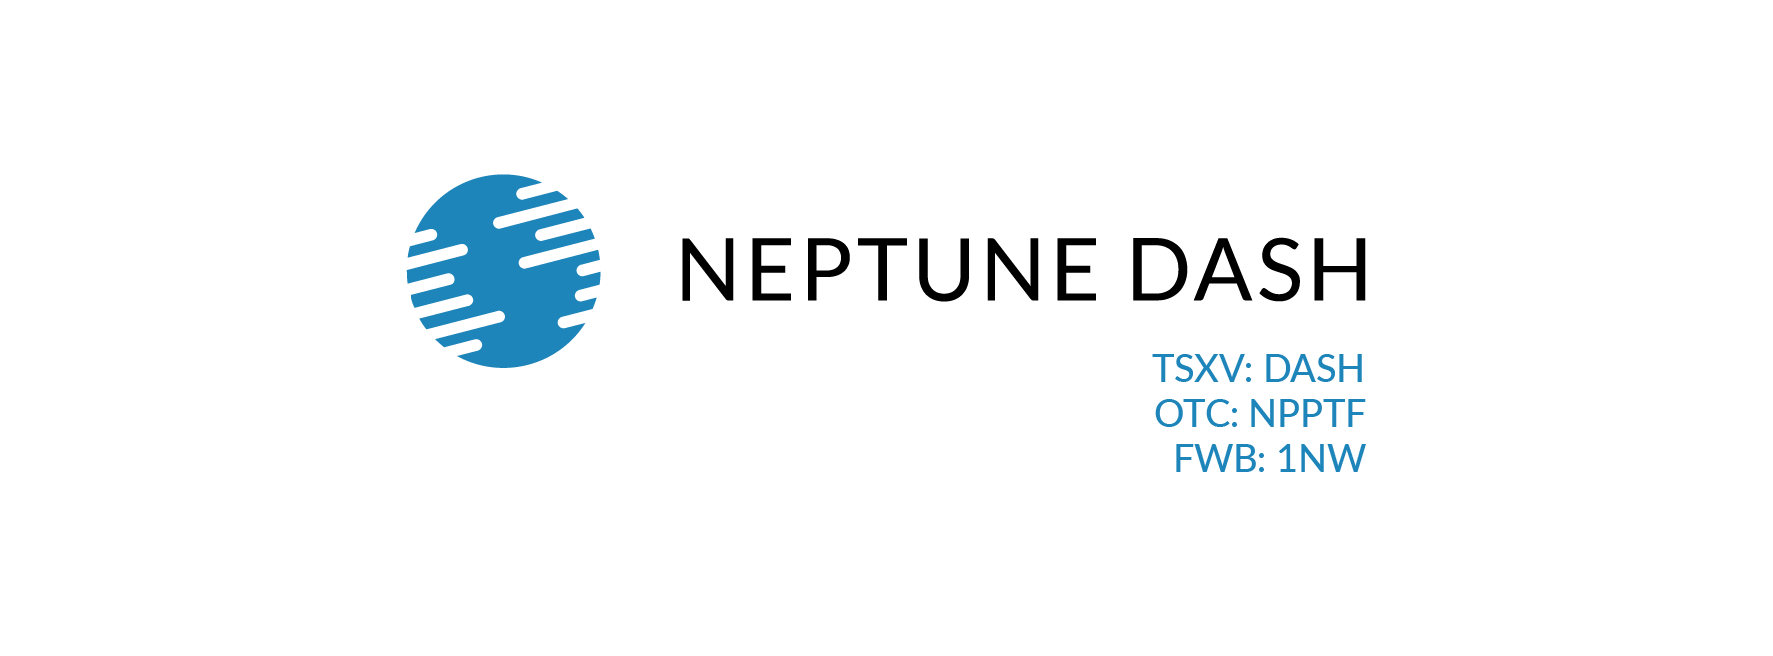 Neptune Dash launches Cosmos validator; invests in ATOM token